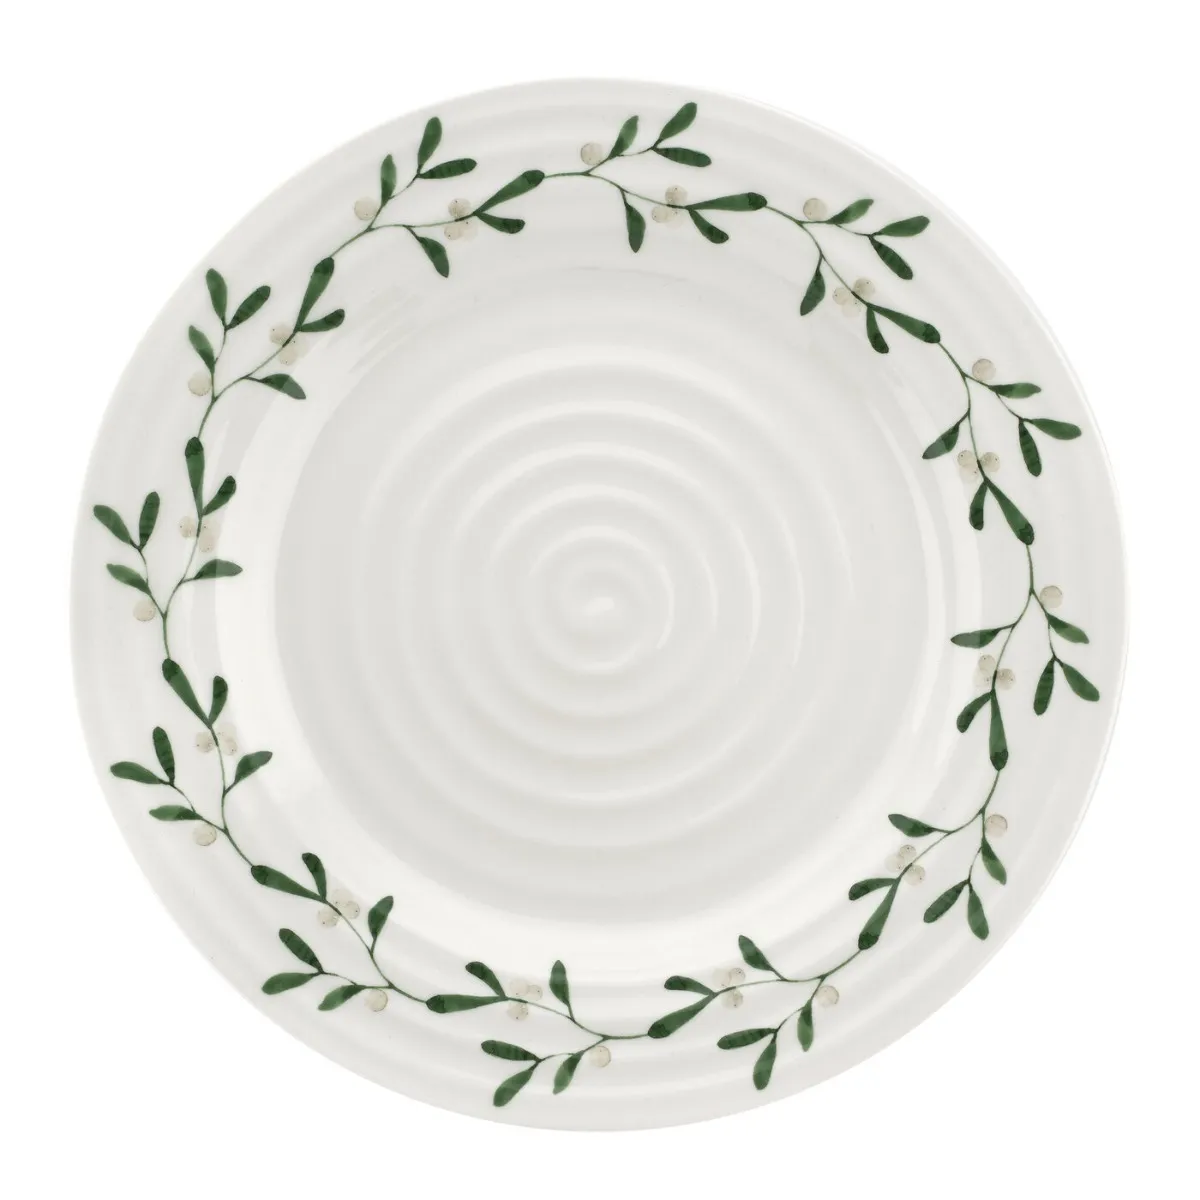 Sophie Conran Mistletoe Dinner Plate 11 Inch